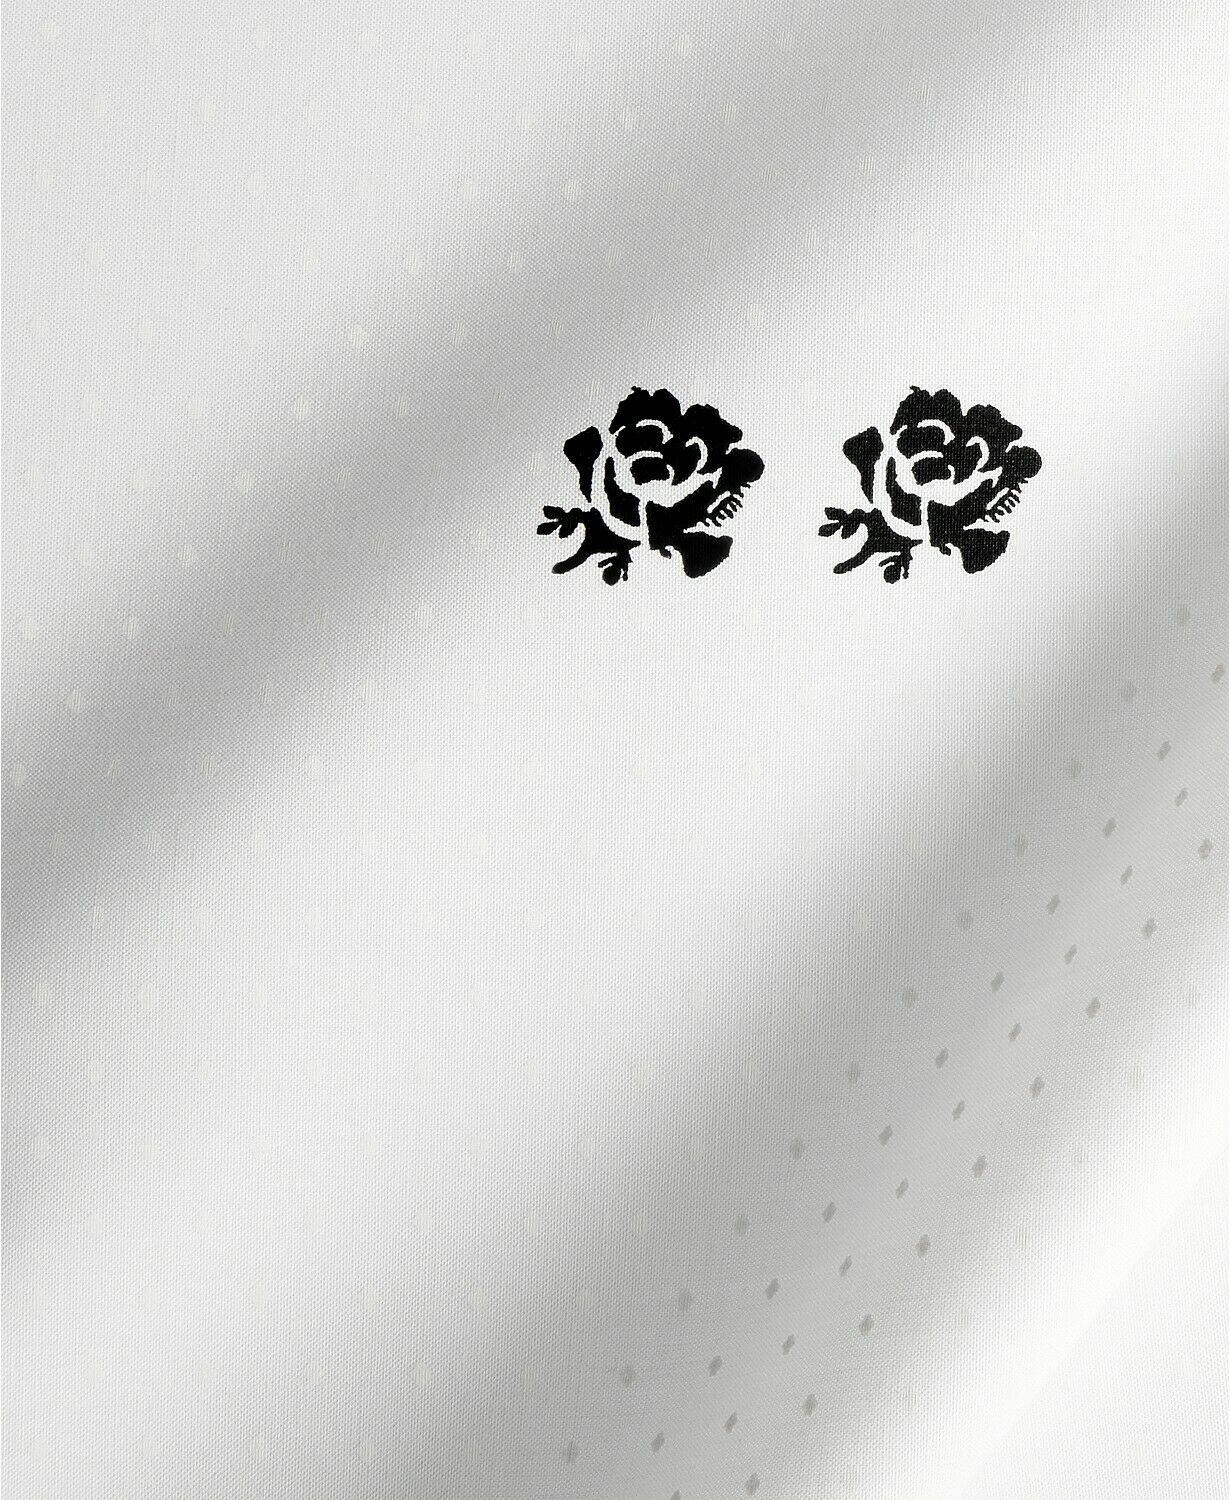 Calvin Klein Clone Floral Dot 100% Combed Cotton Comforter - QUEEN - White Black - image 4 of 4